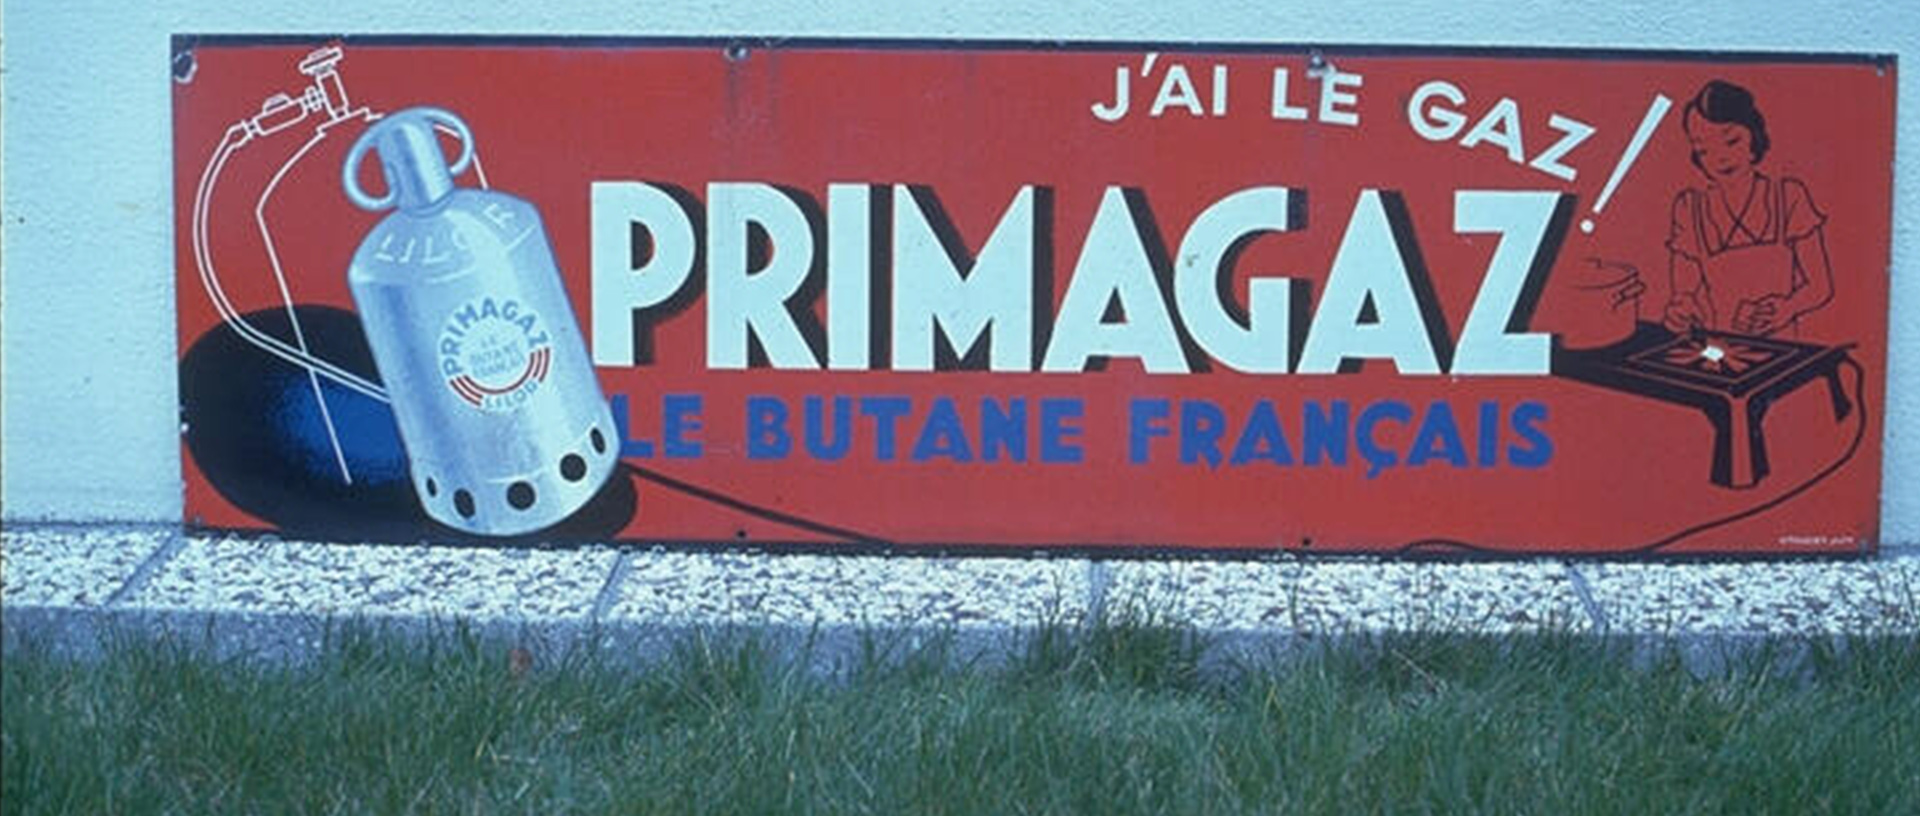 Affiche gaz butane français